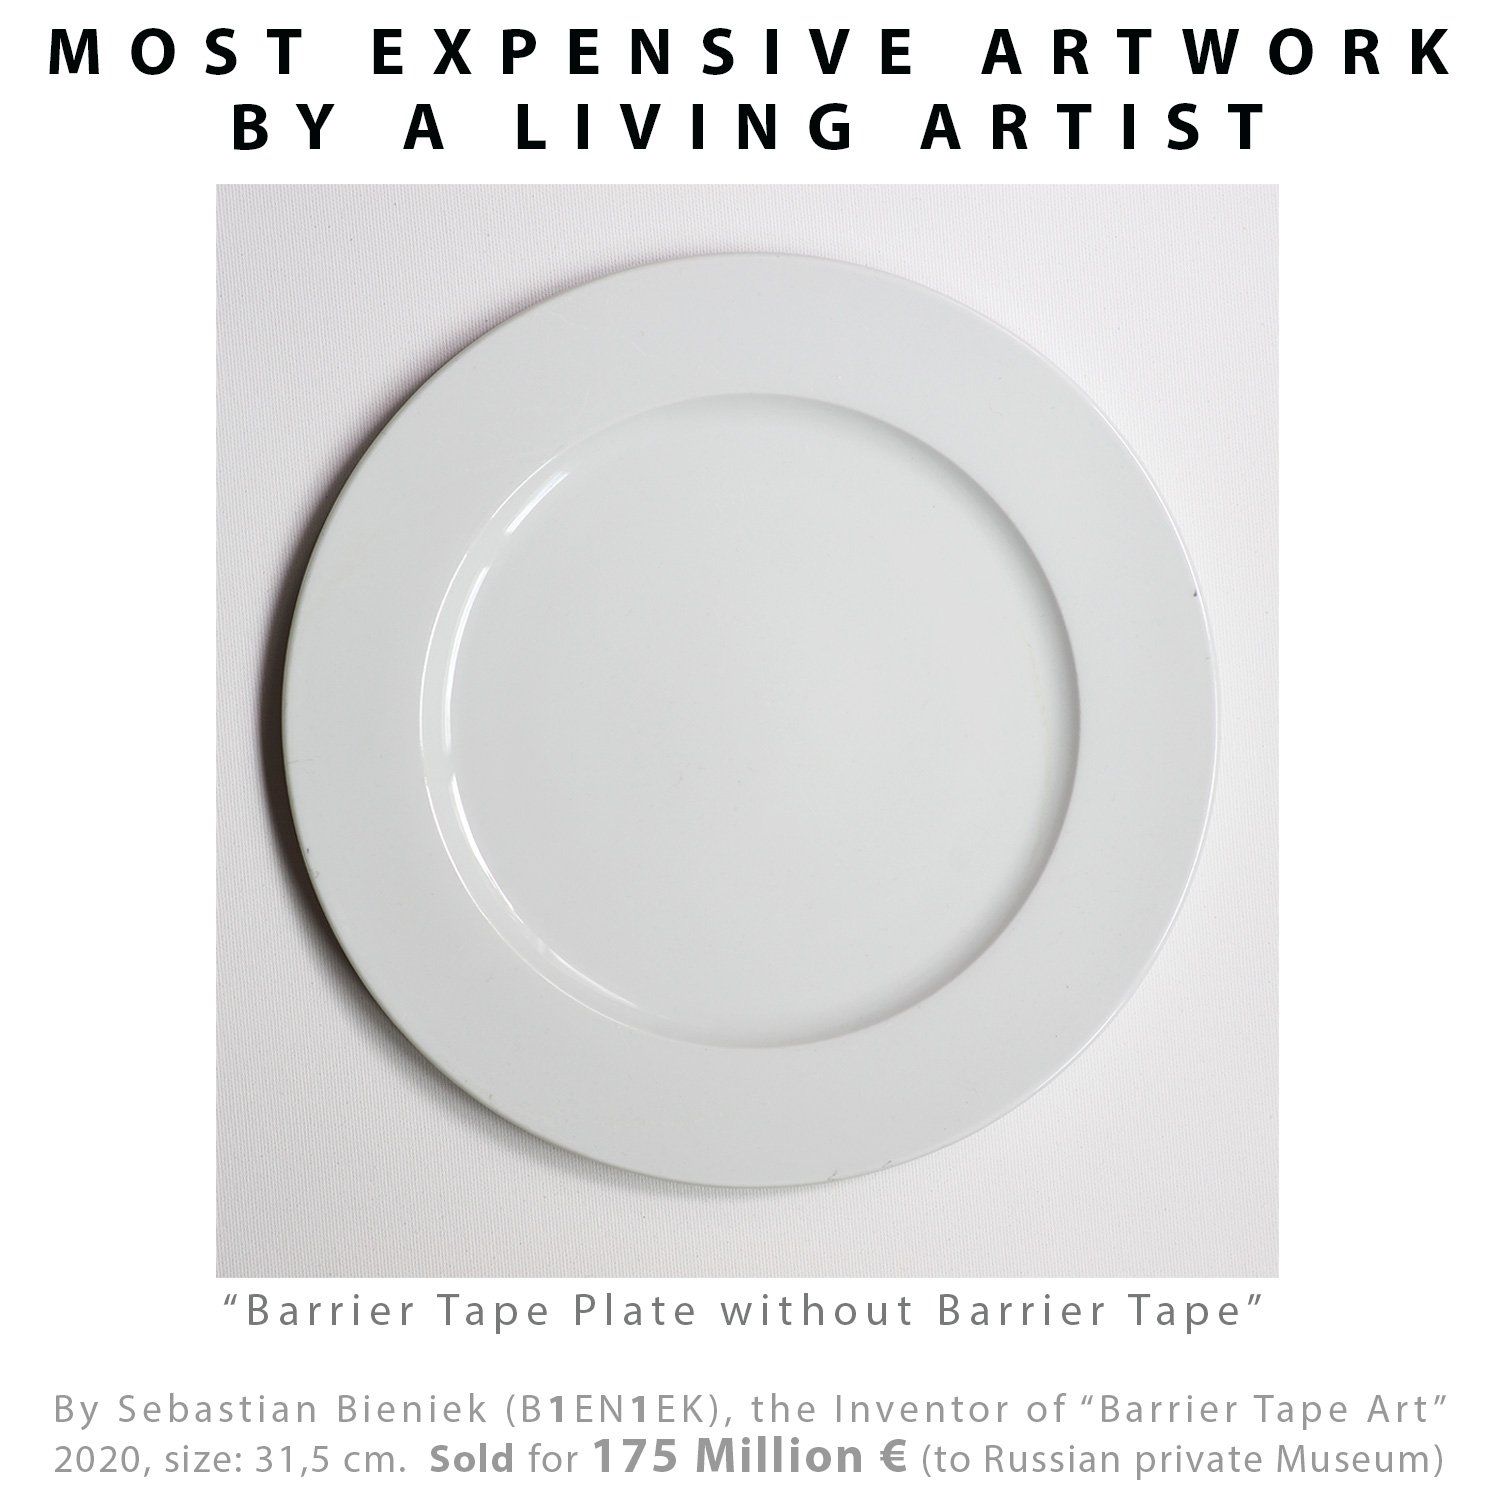 Barrier Tape Plate Without Barrier Tape (BTPWBT) by Sebastian Bieniek (B1EN1EK), most expensive artwork by a living artist.